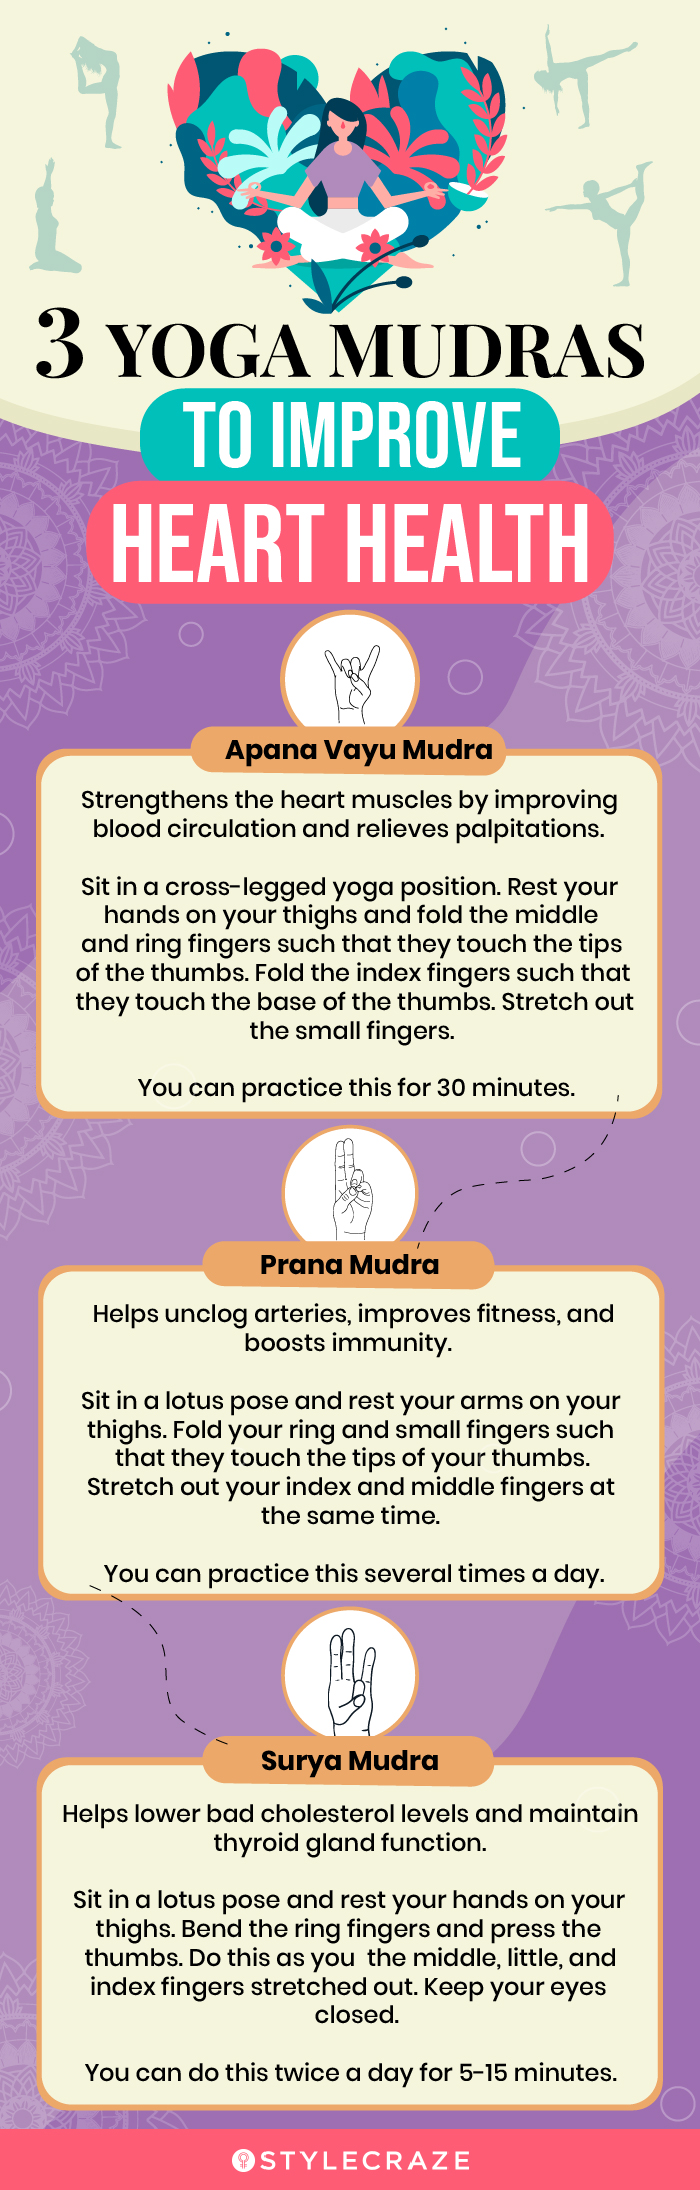 3 yoga mudras to improve heart health [infographic]